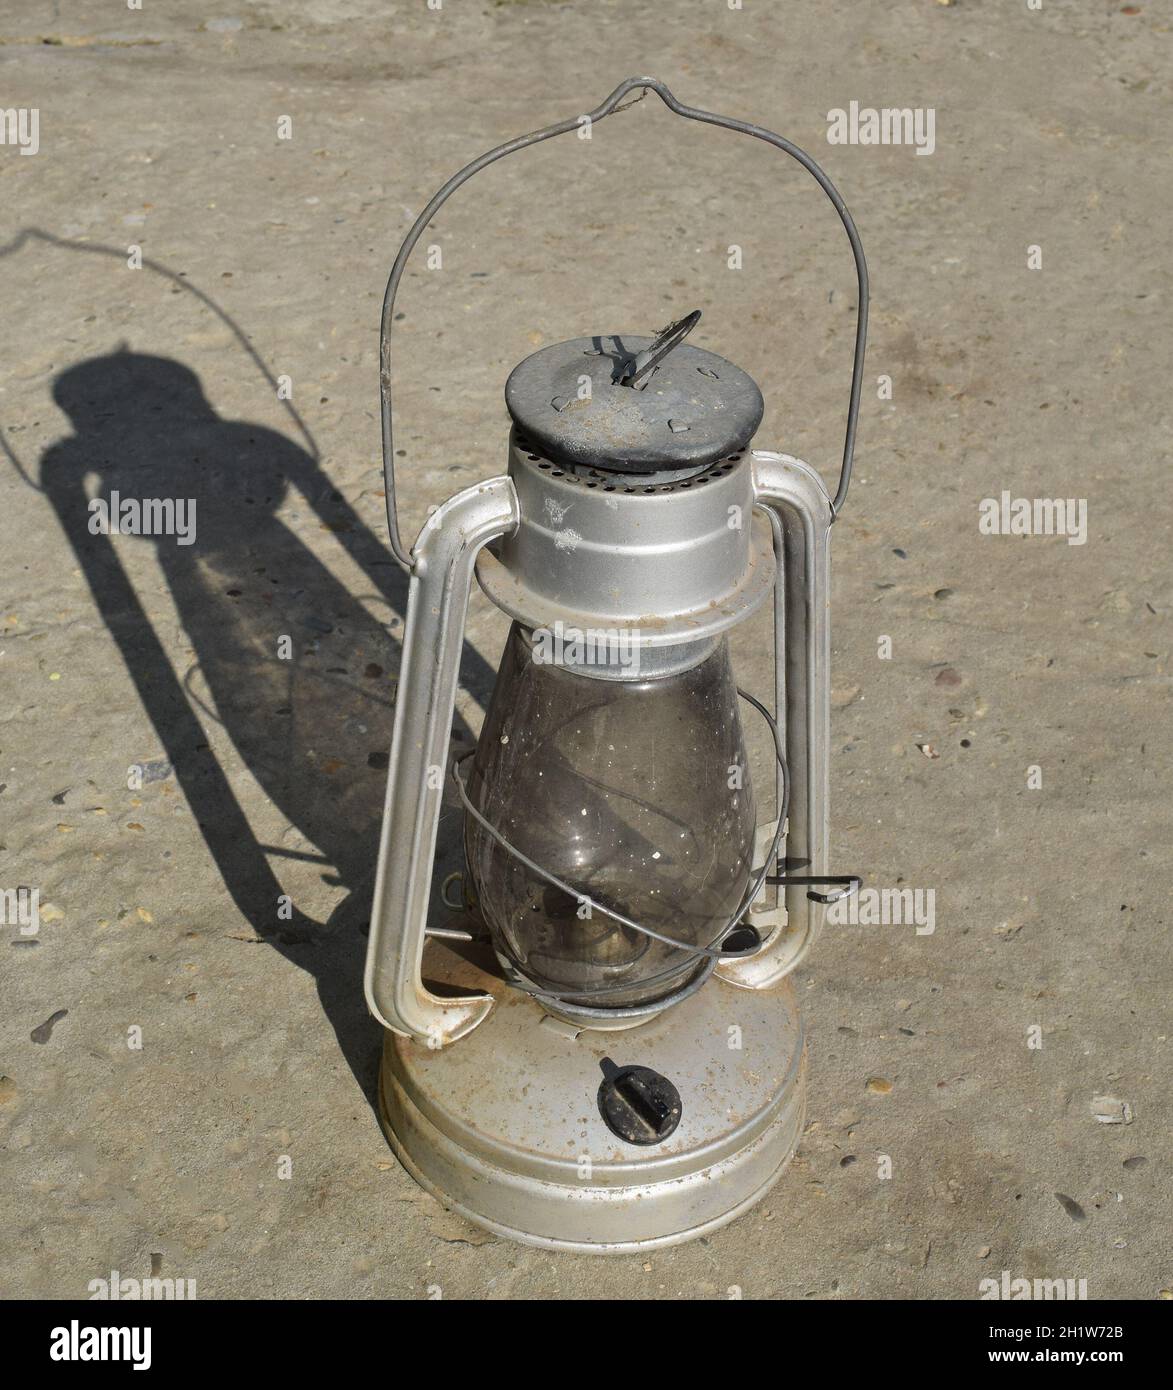 Old kerosene lamp. The old lighting fixture. Stock Photo